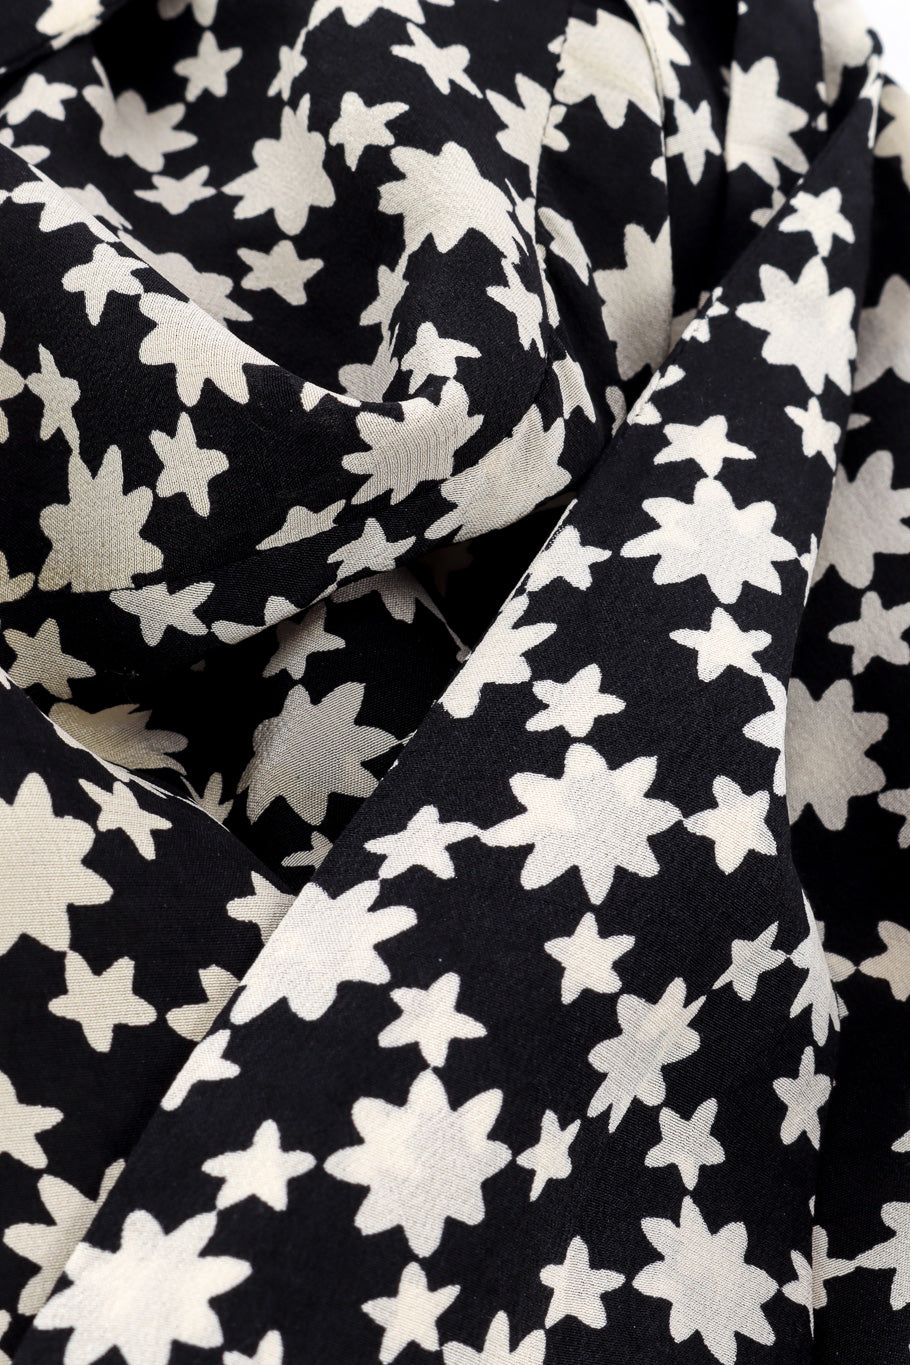 Star print blouse by Yves Saint Laurent fabric close @recessla